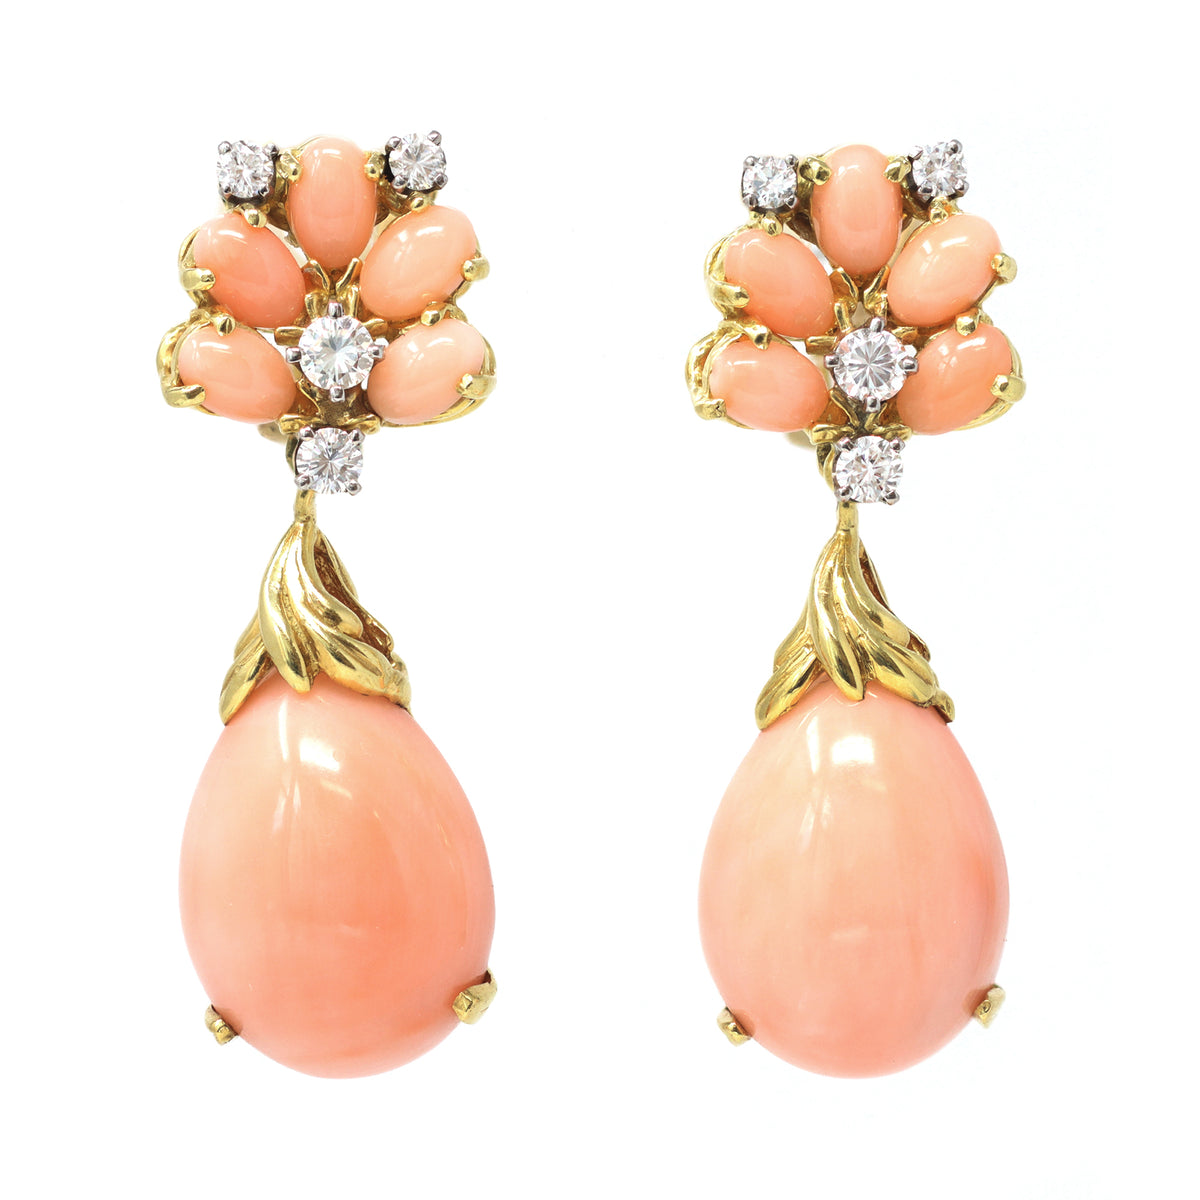 Signed La Triomphe Coral &amp; Diamond Dangling Earrings in 18K